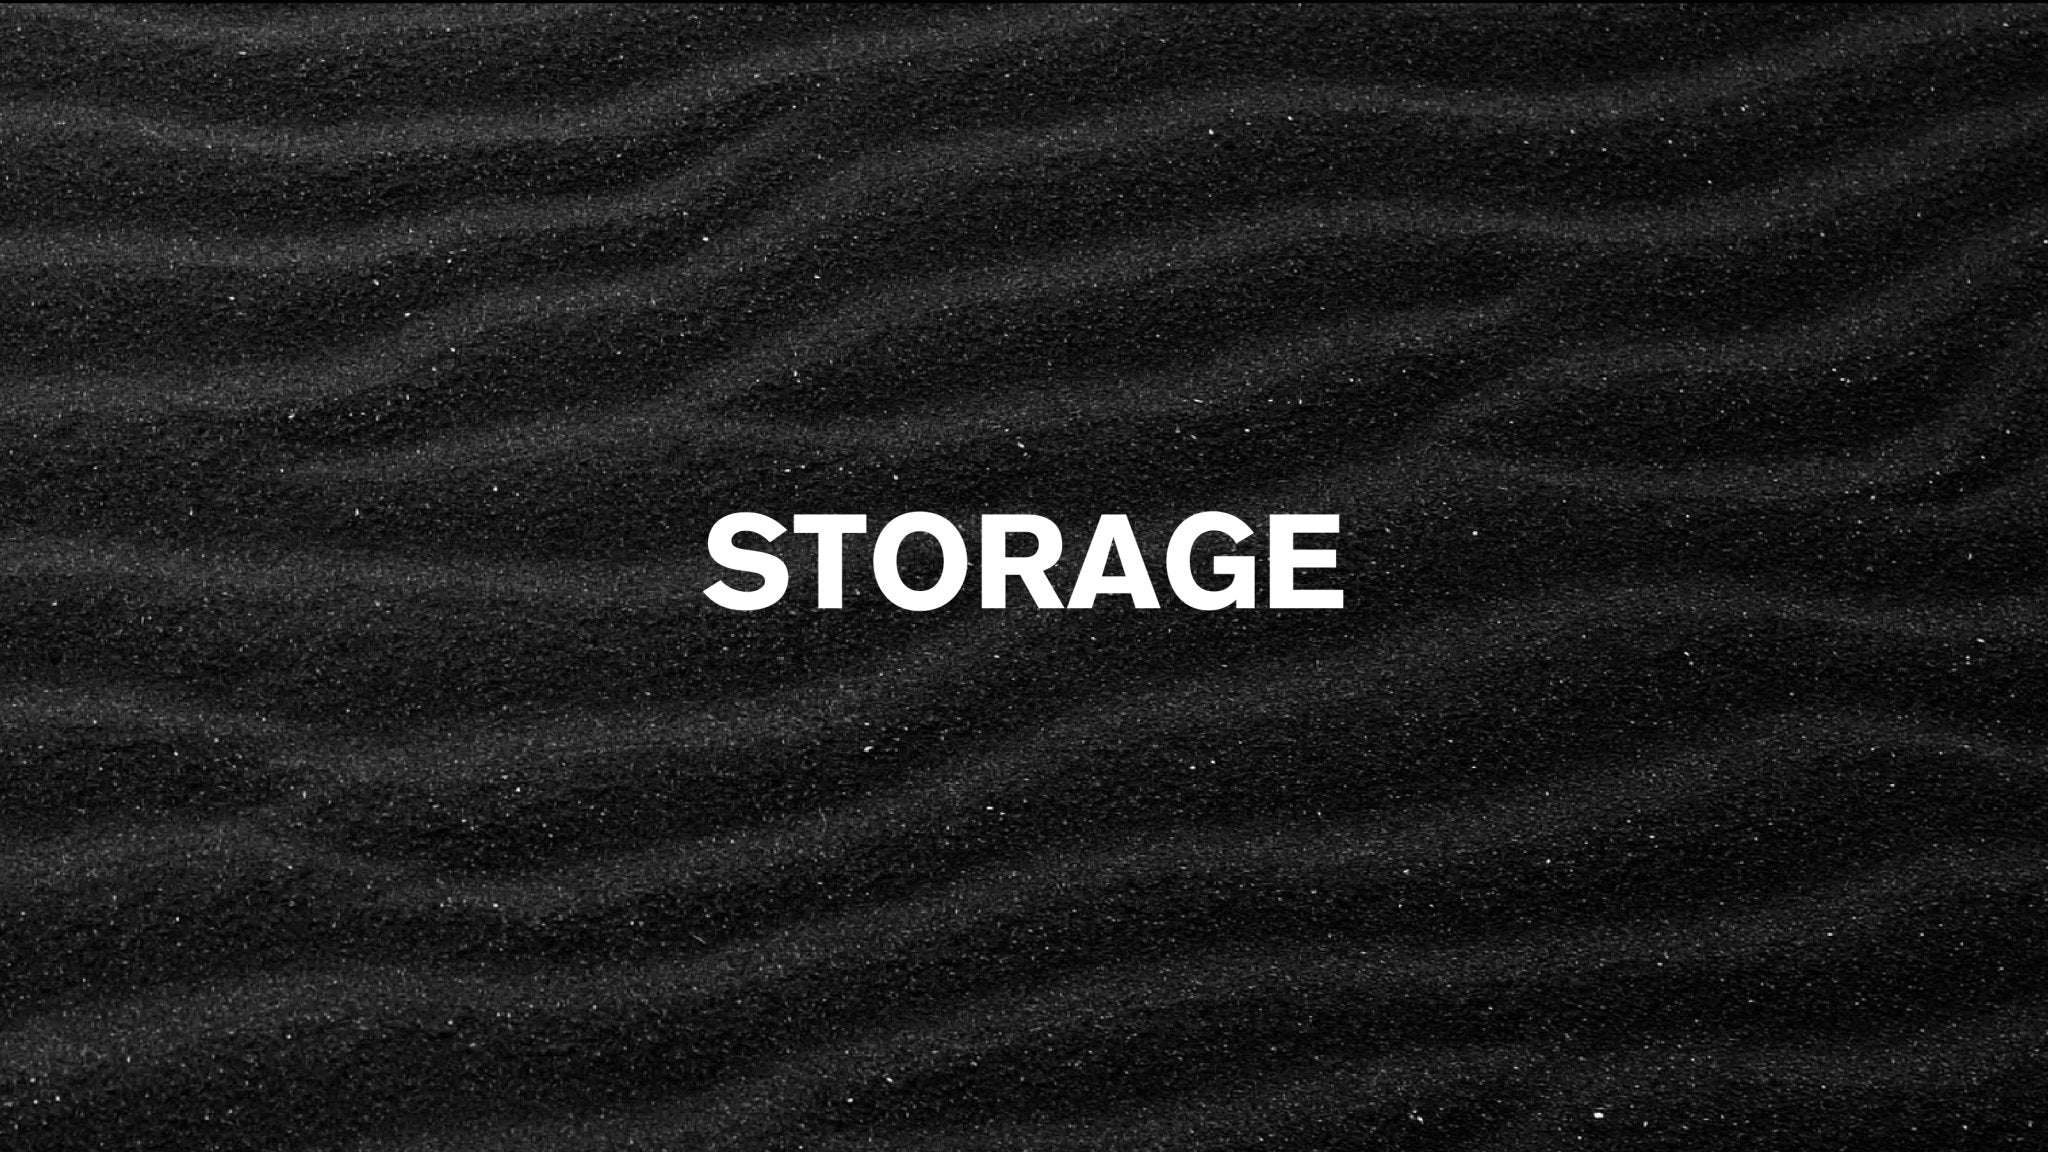 Storage - Touchwood